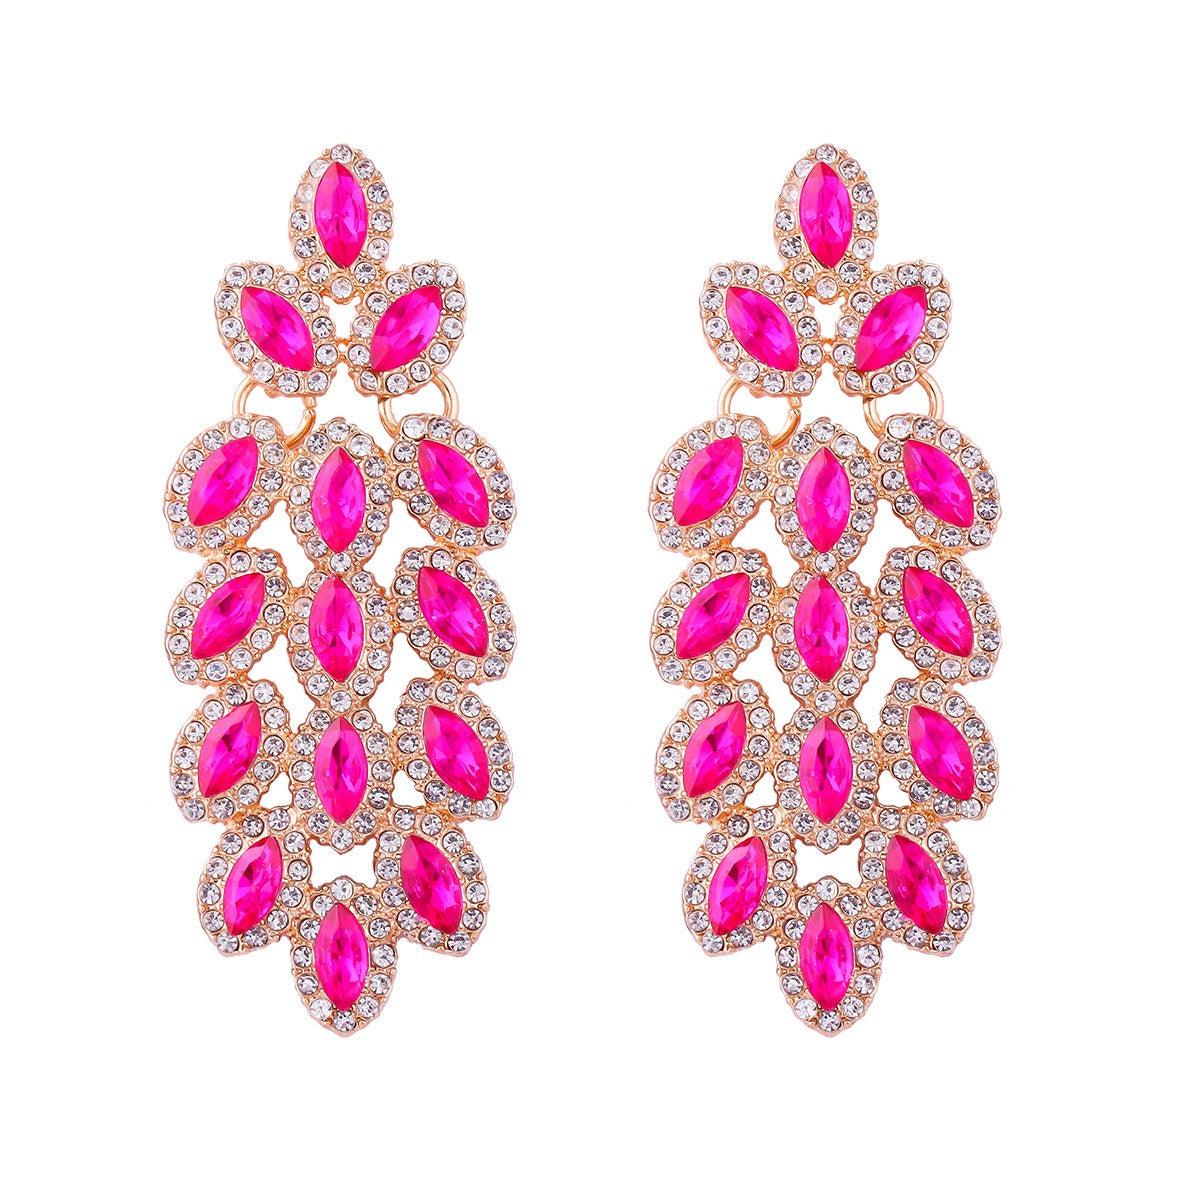 Retro personalized geometric stud earrings full of diamonds and tassels light luxury style wedding earrings